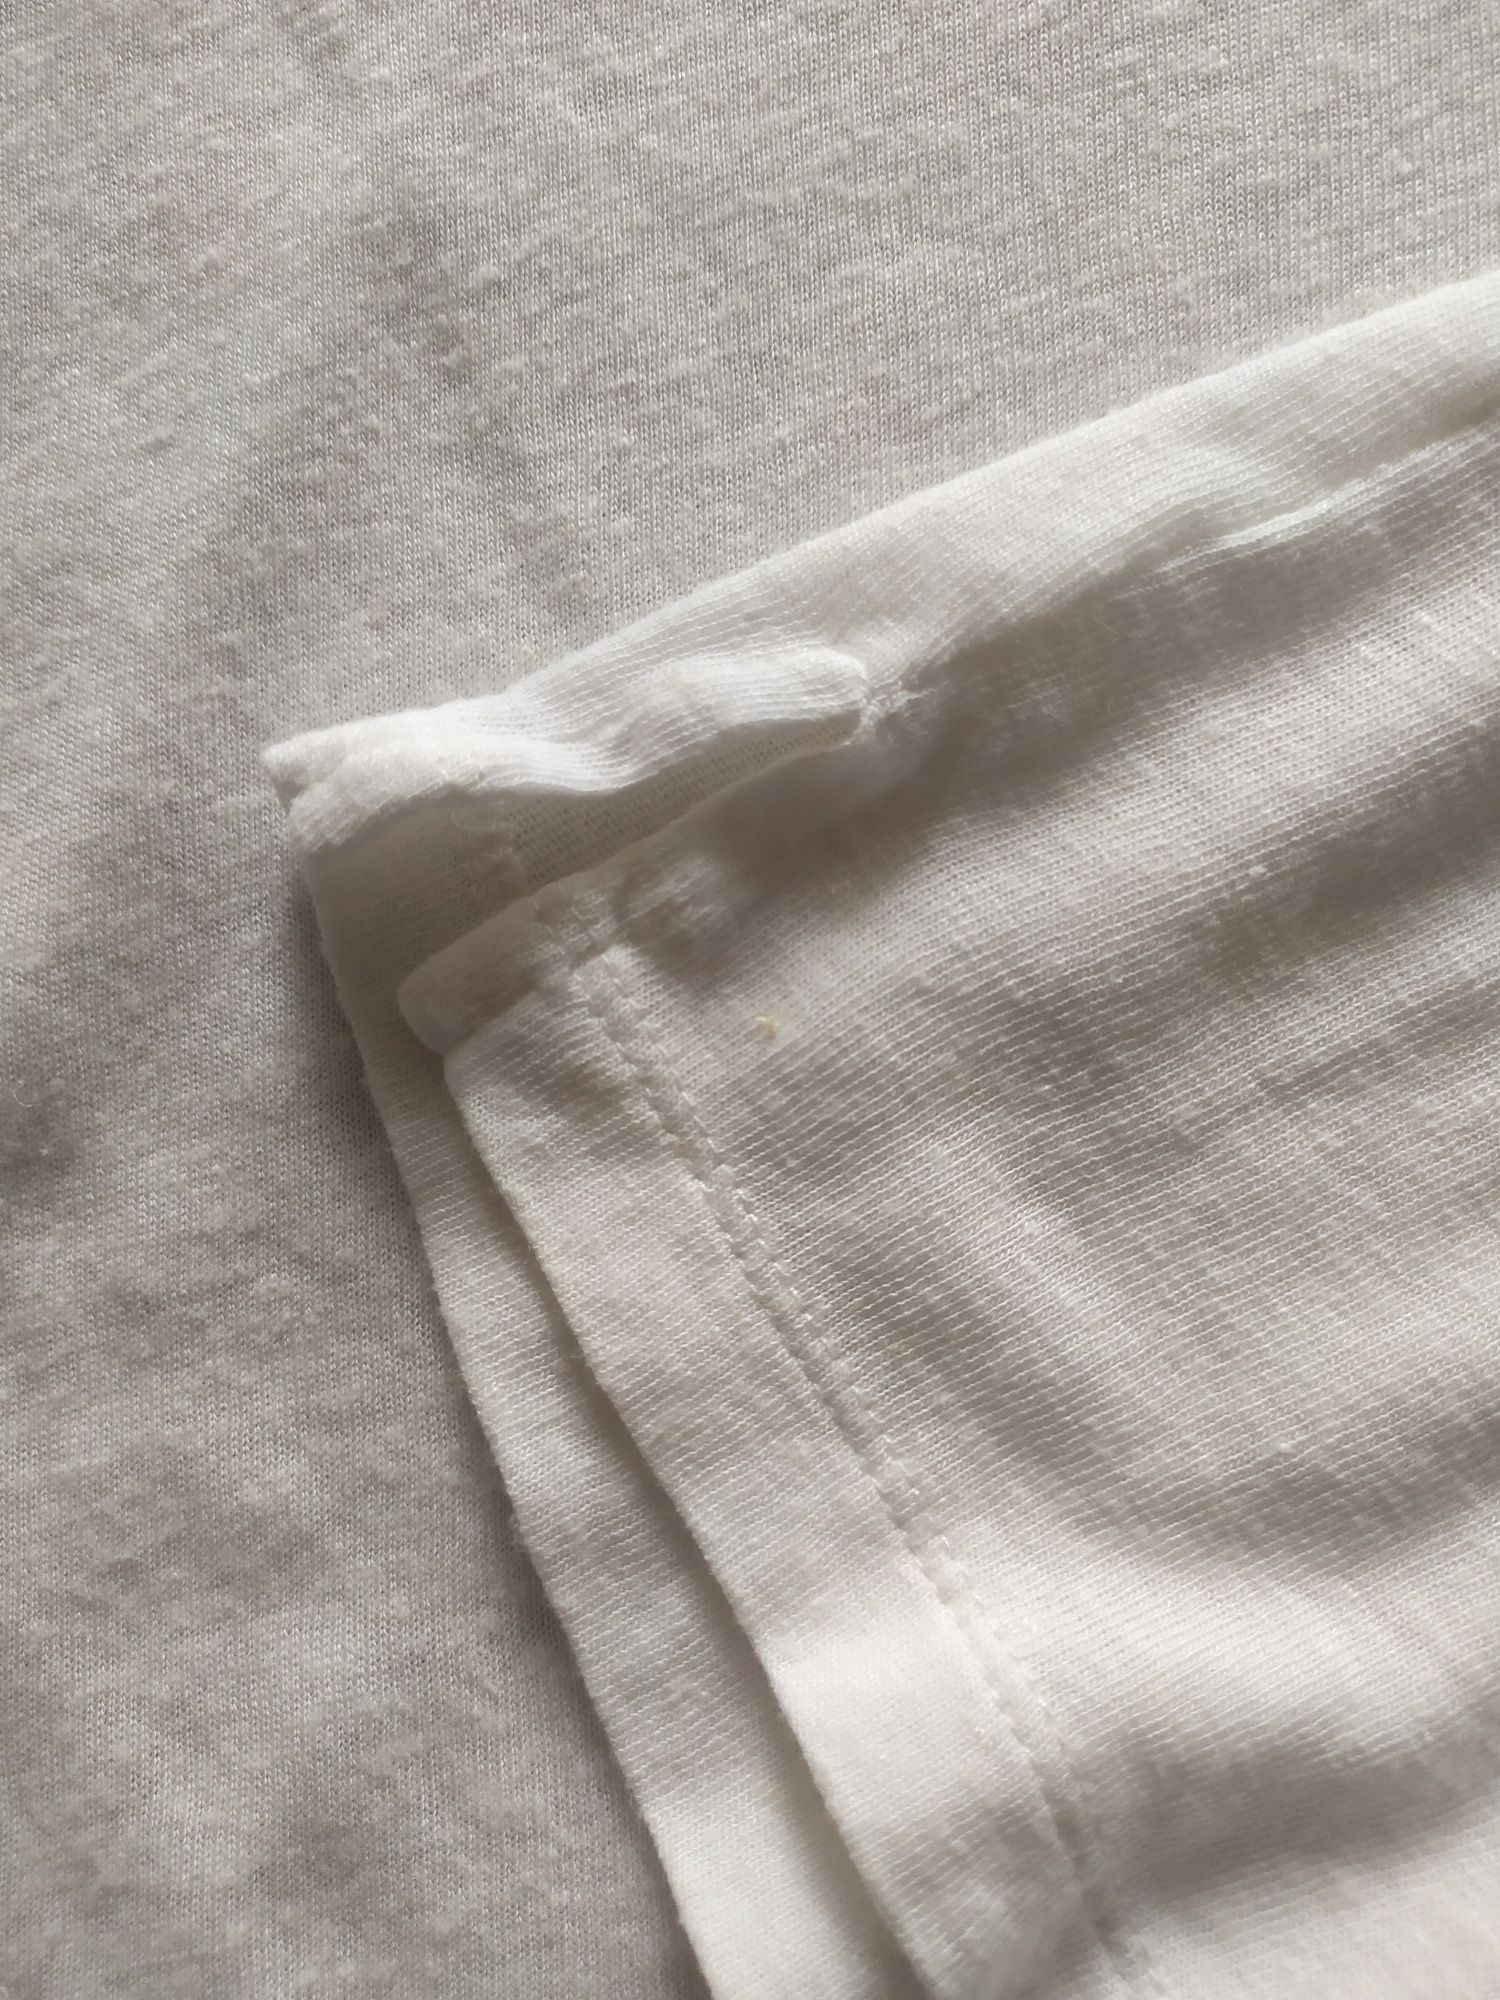 H&M kremowa przewiewna bluzka z rękawkami, t-shirt top.